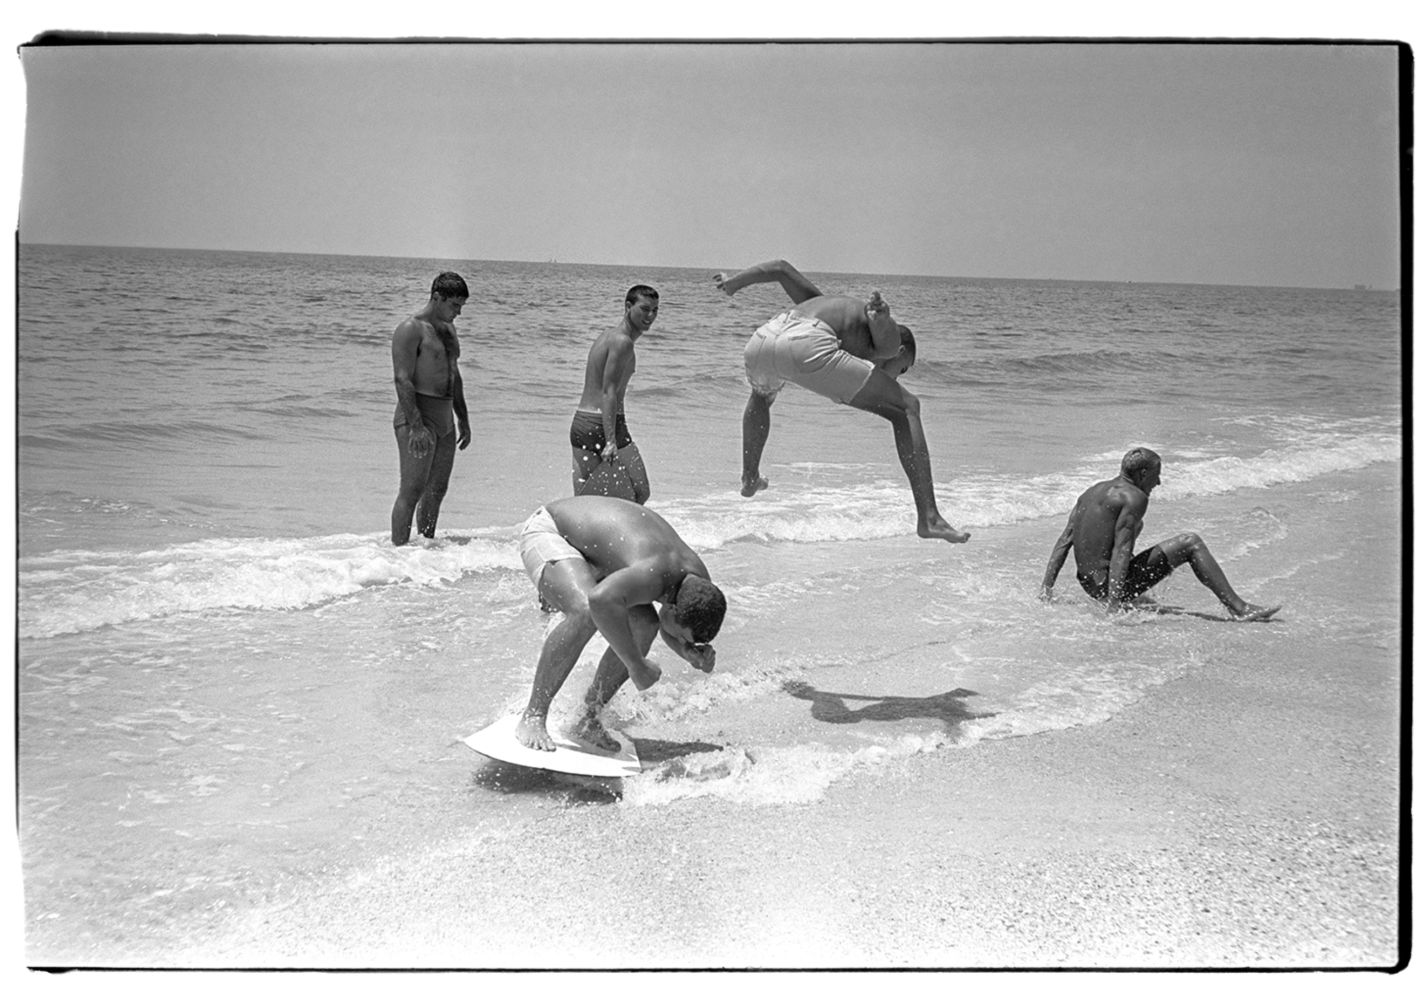 Al Satterwhite, Surf Skimmers, 1964